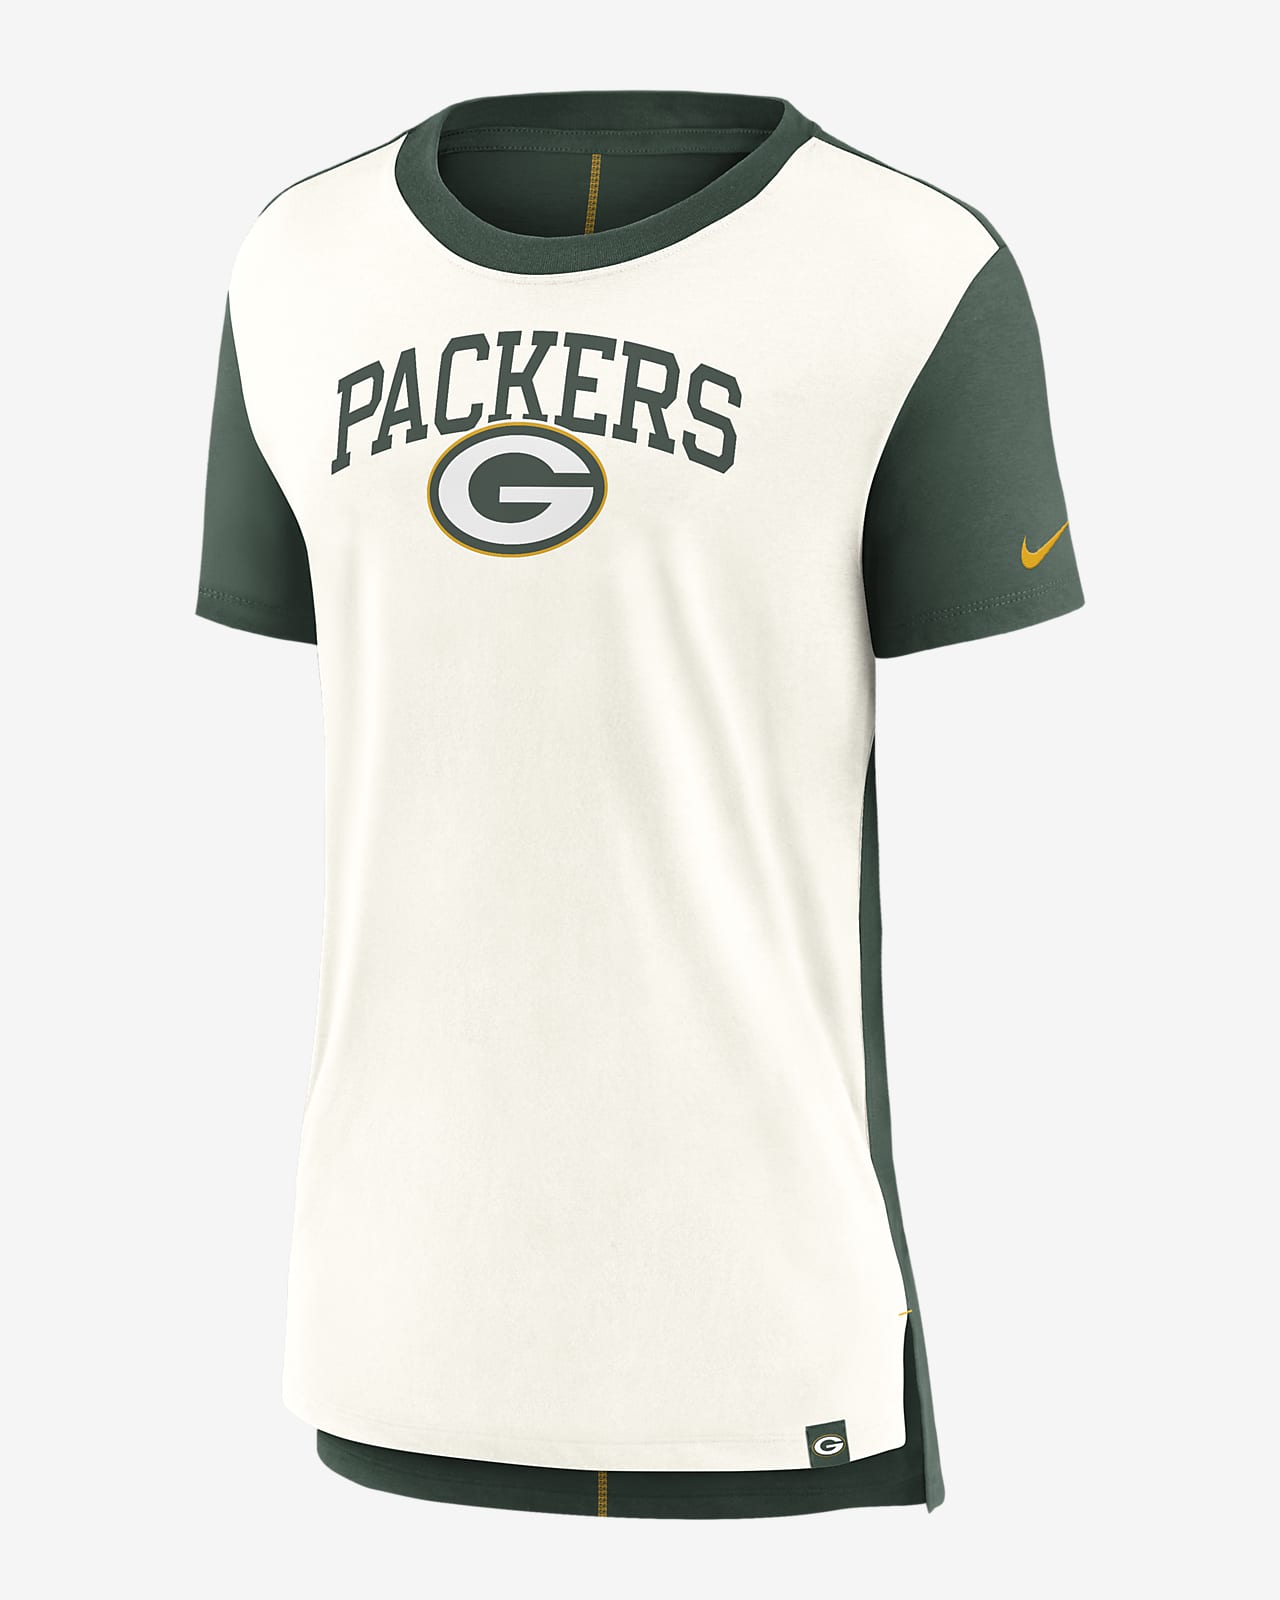 Playera Nike de la NFL para mujer Green Bay Packers